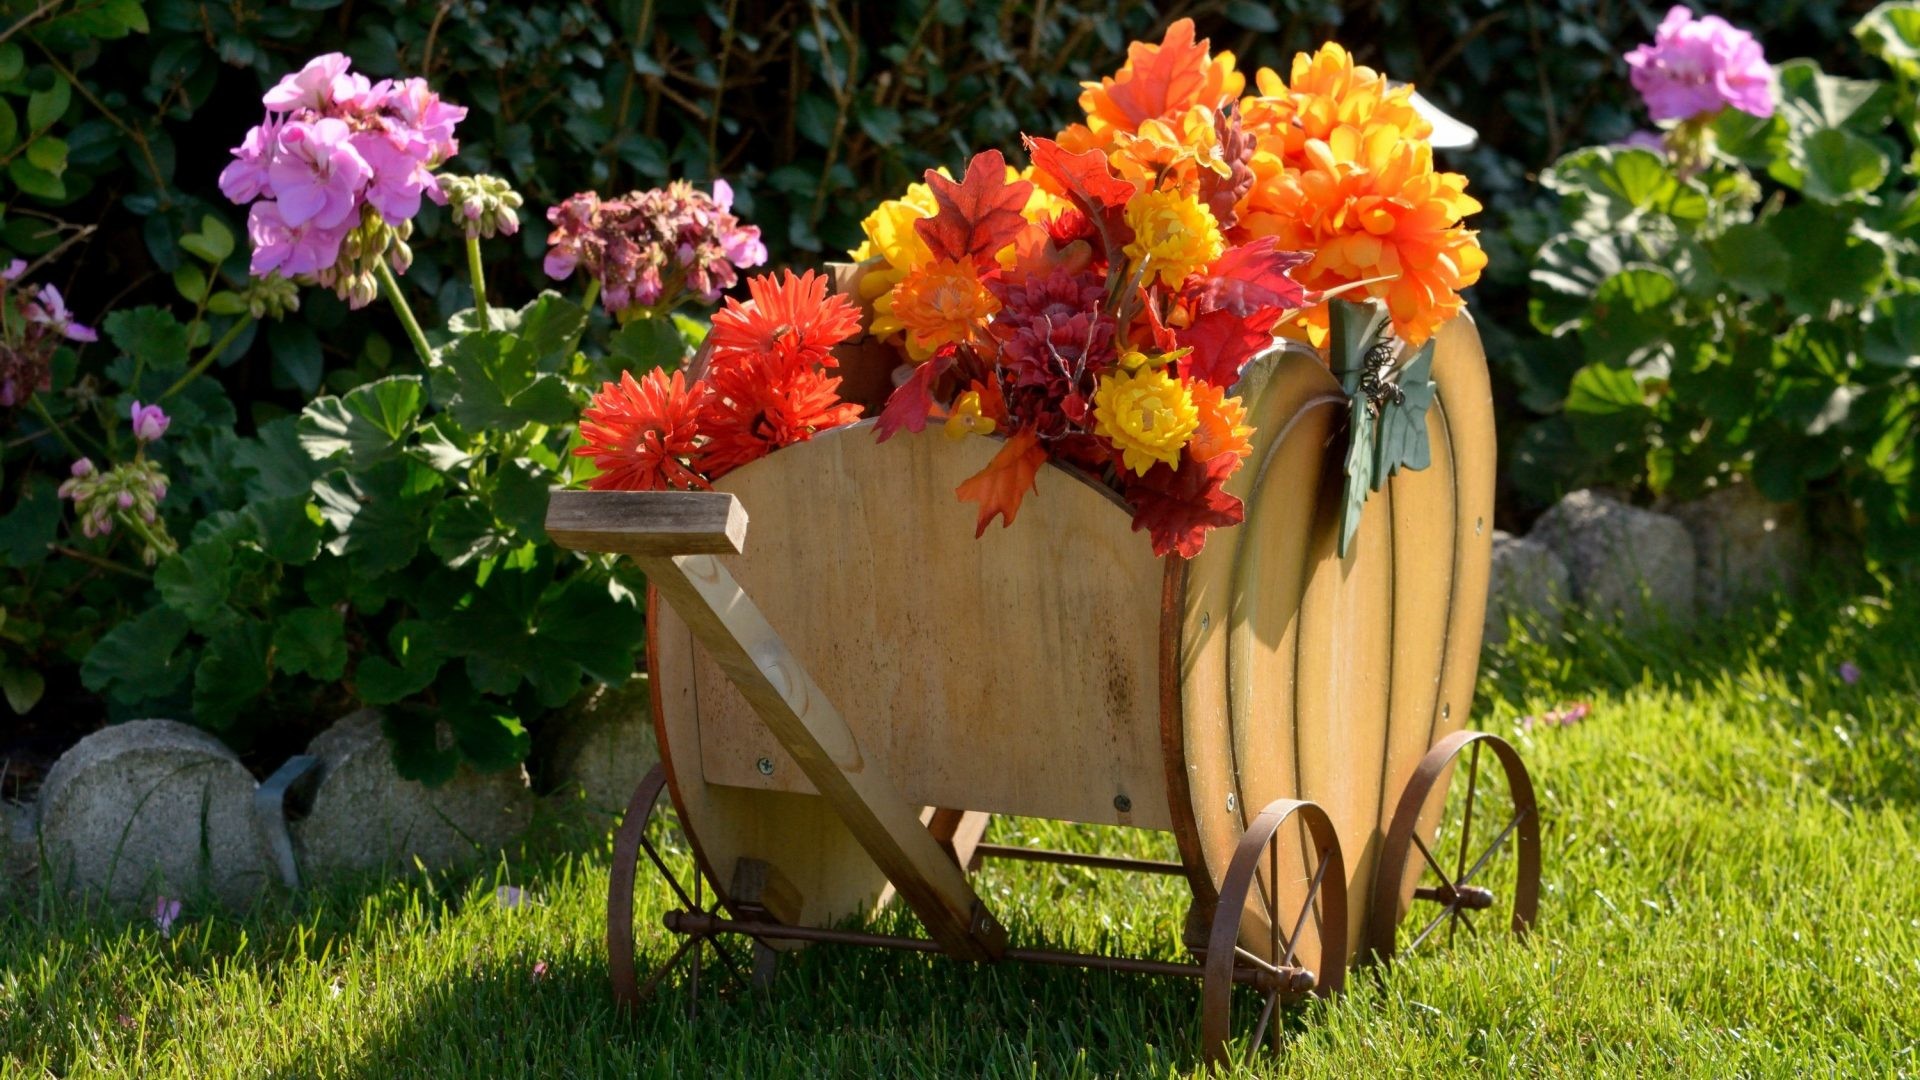 1920x1080 Festive Tag - Festive Wagon Decor Harvest Autumn Flower Scene Desktop  Flowers Backgrounds for HD 16